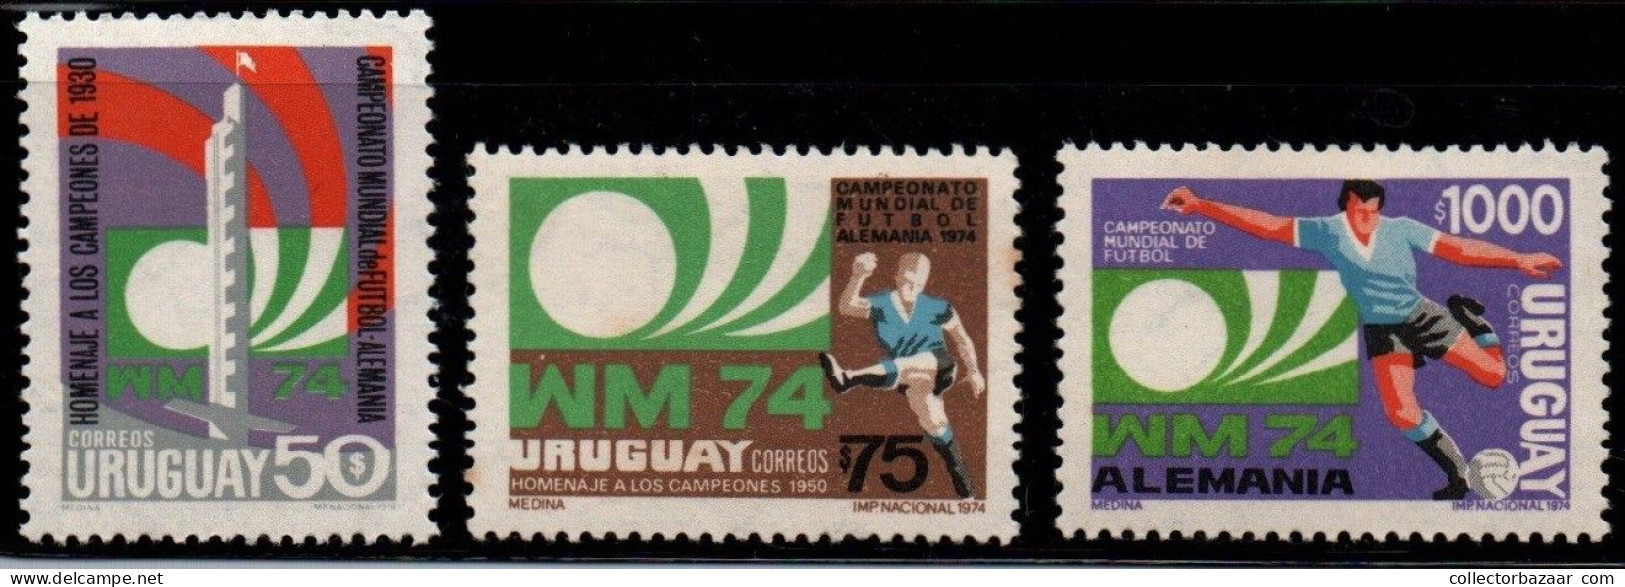 1974 Uruguay Montevideo Stadium Tower Soccer Player Games Emblem  Championship Munich 1974 #879 - 881 ** MNH - Uruguay